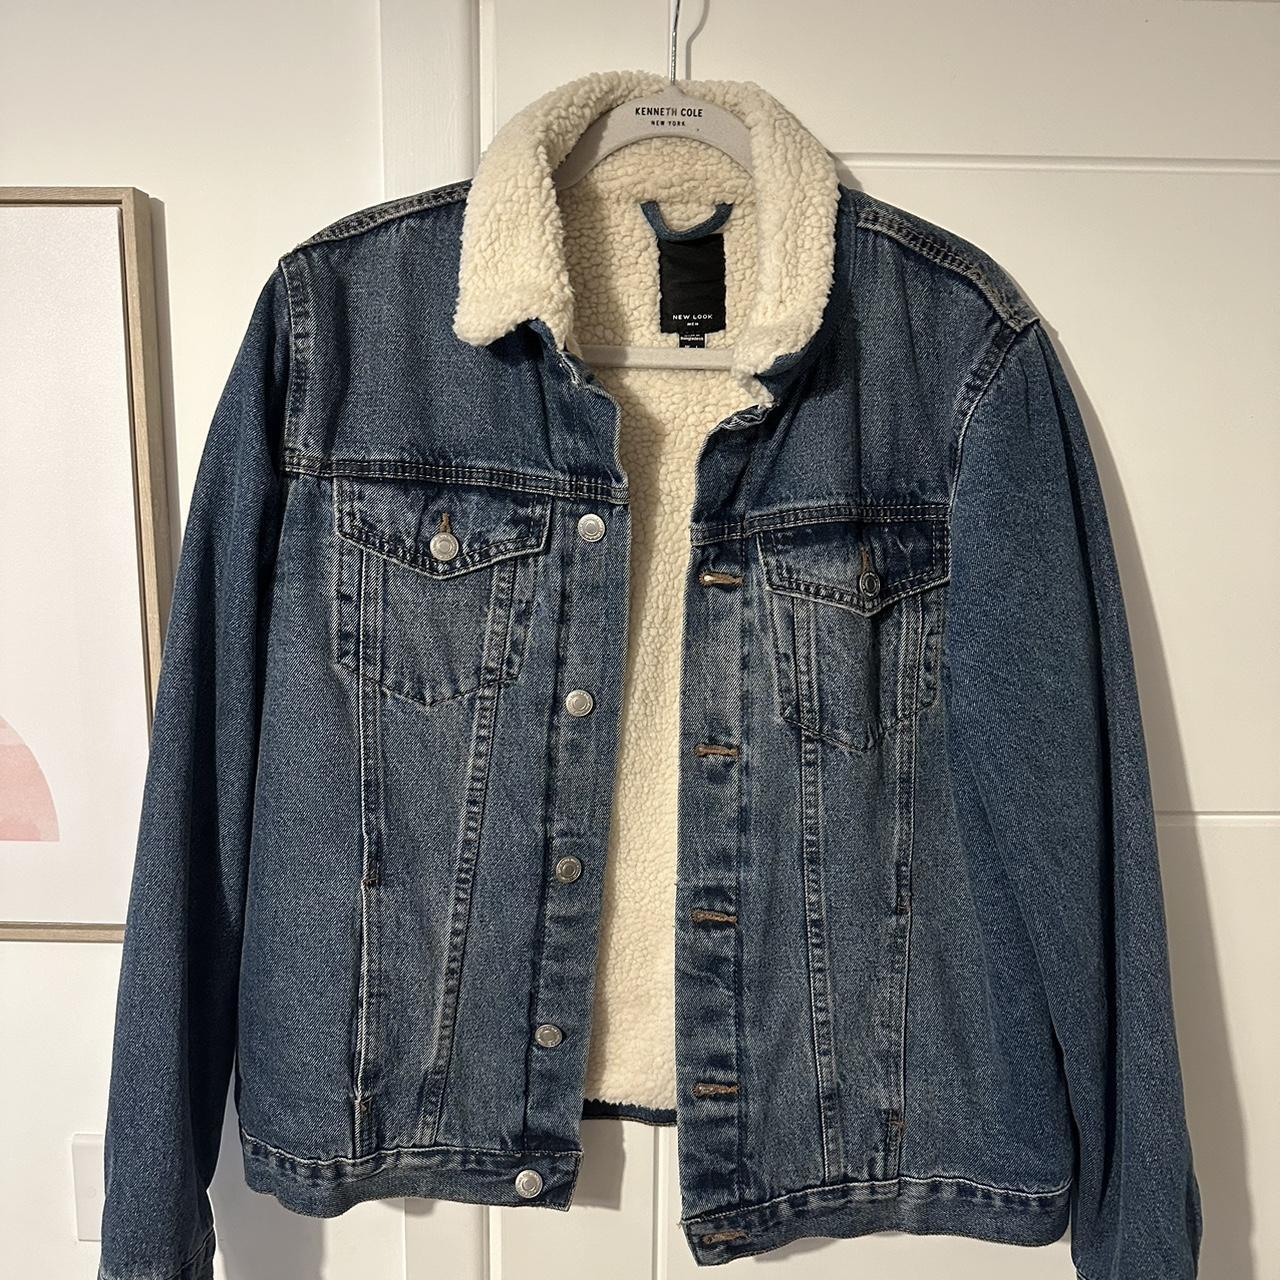 Jean jacket with wooly liner - Depop